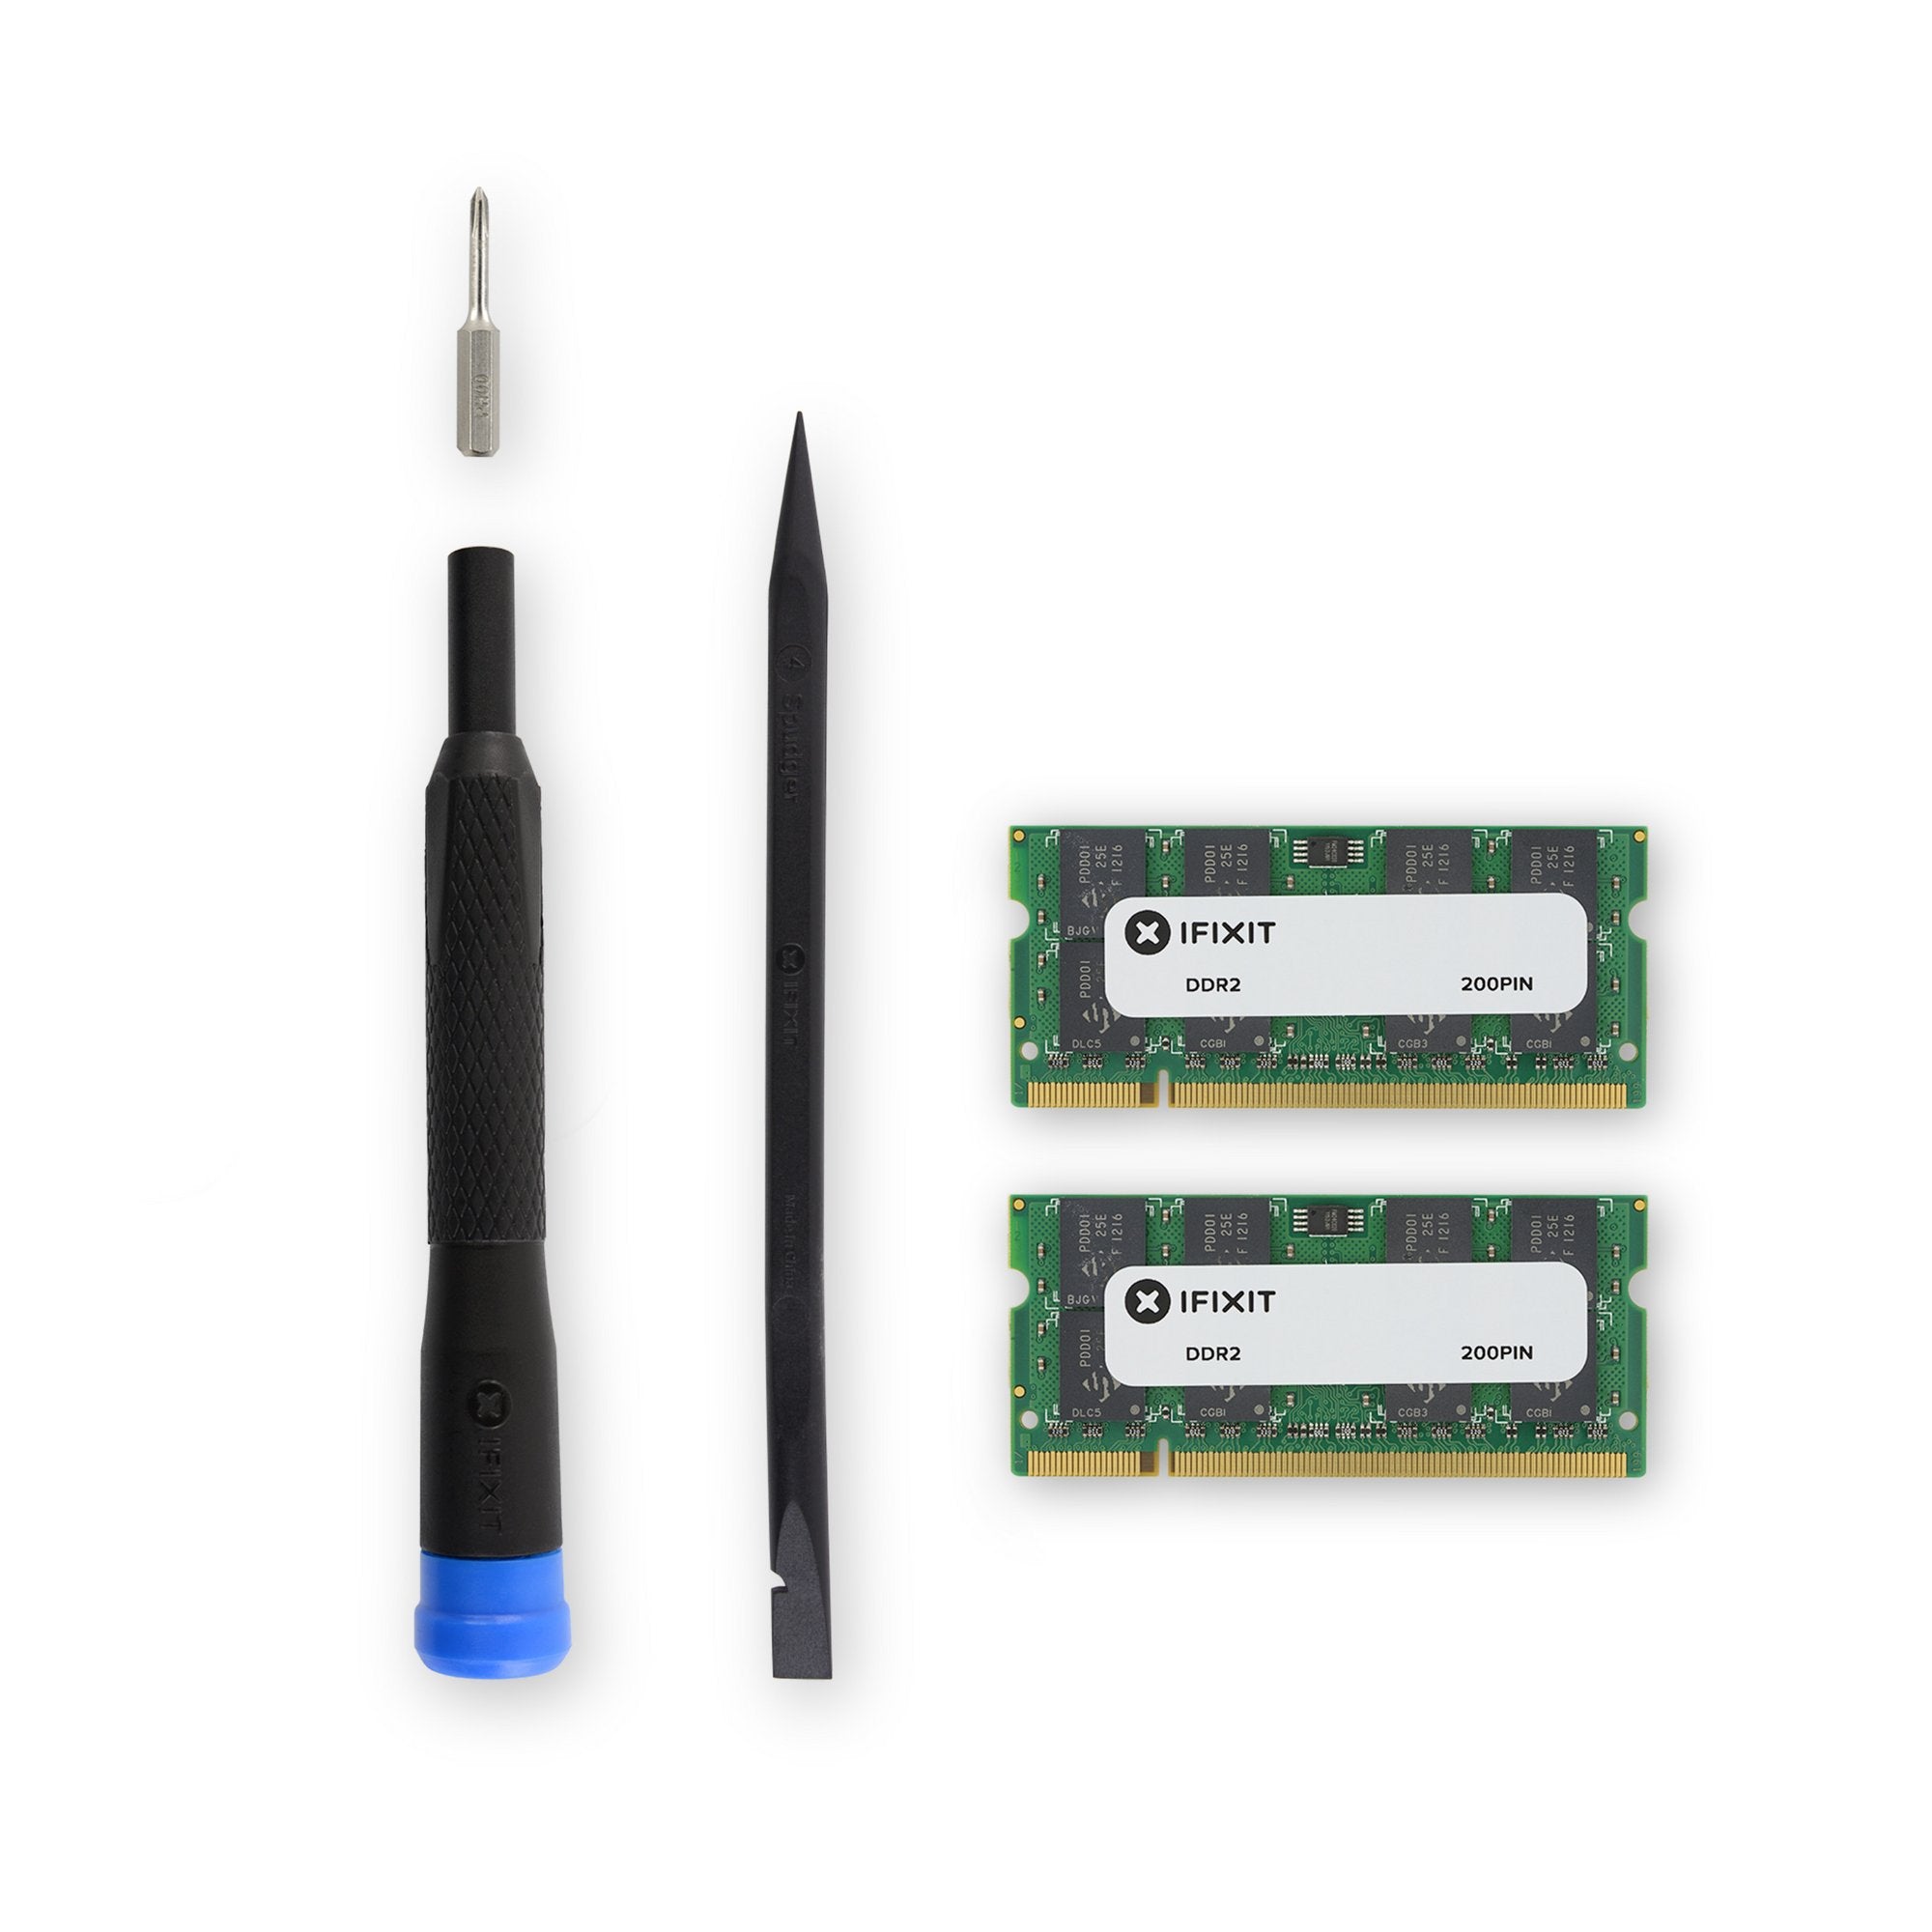 MacBook 13" Santa Rosa Memory Maxxer RAM Upgrade Kit